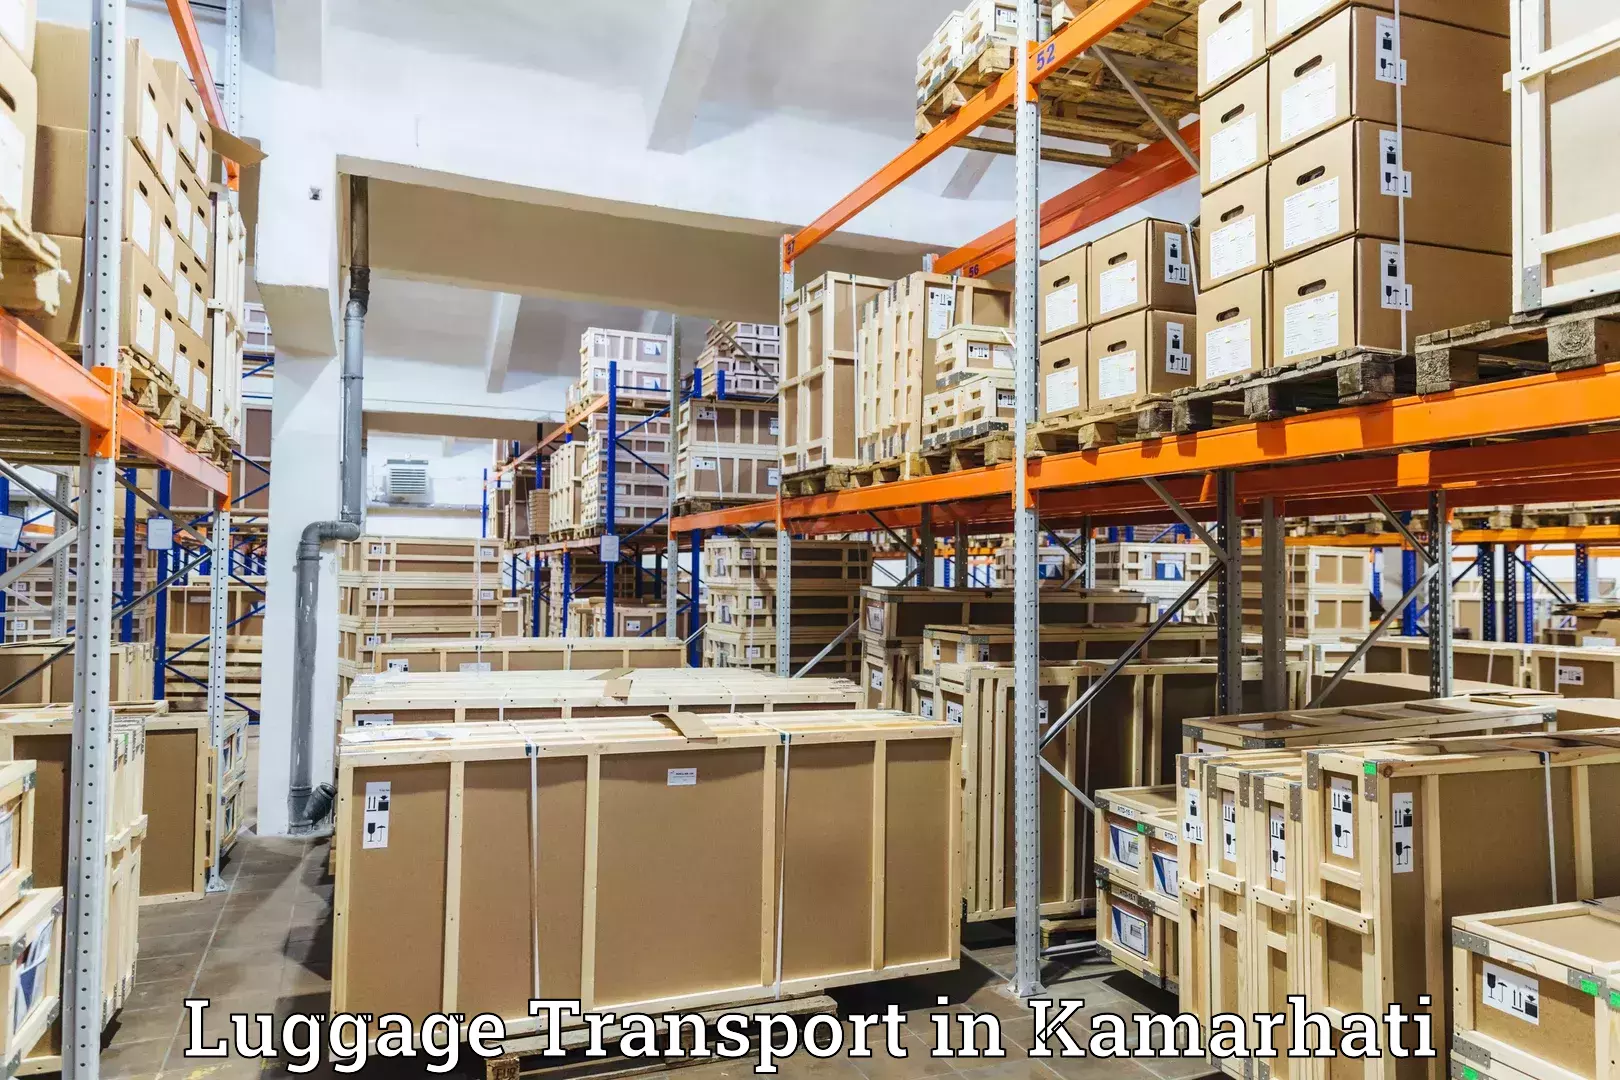 Multi-destination luggage transport in Kamarhati